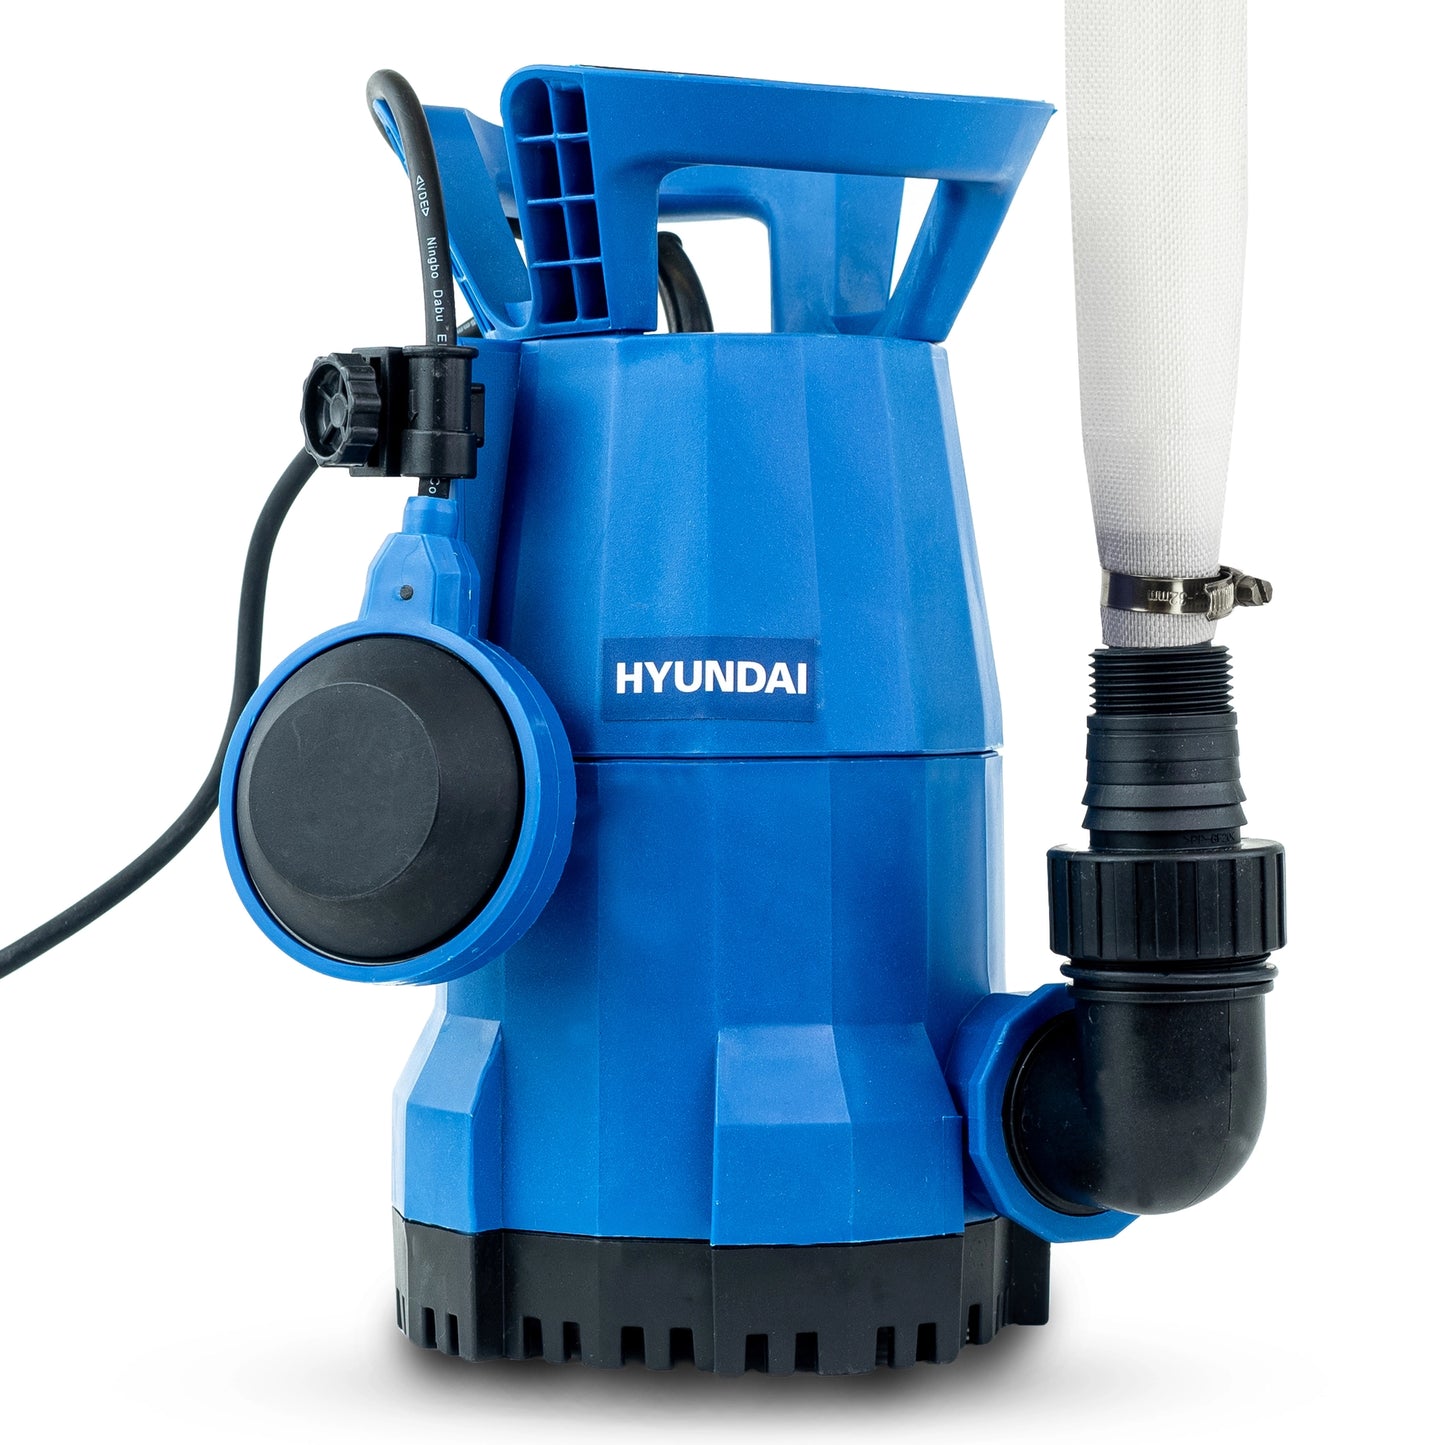 Hyundai HYSP250CW Electric Clean Water Submersible Pump